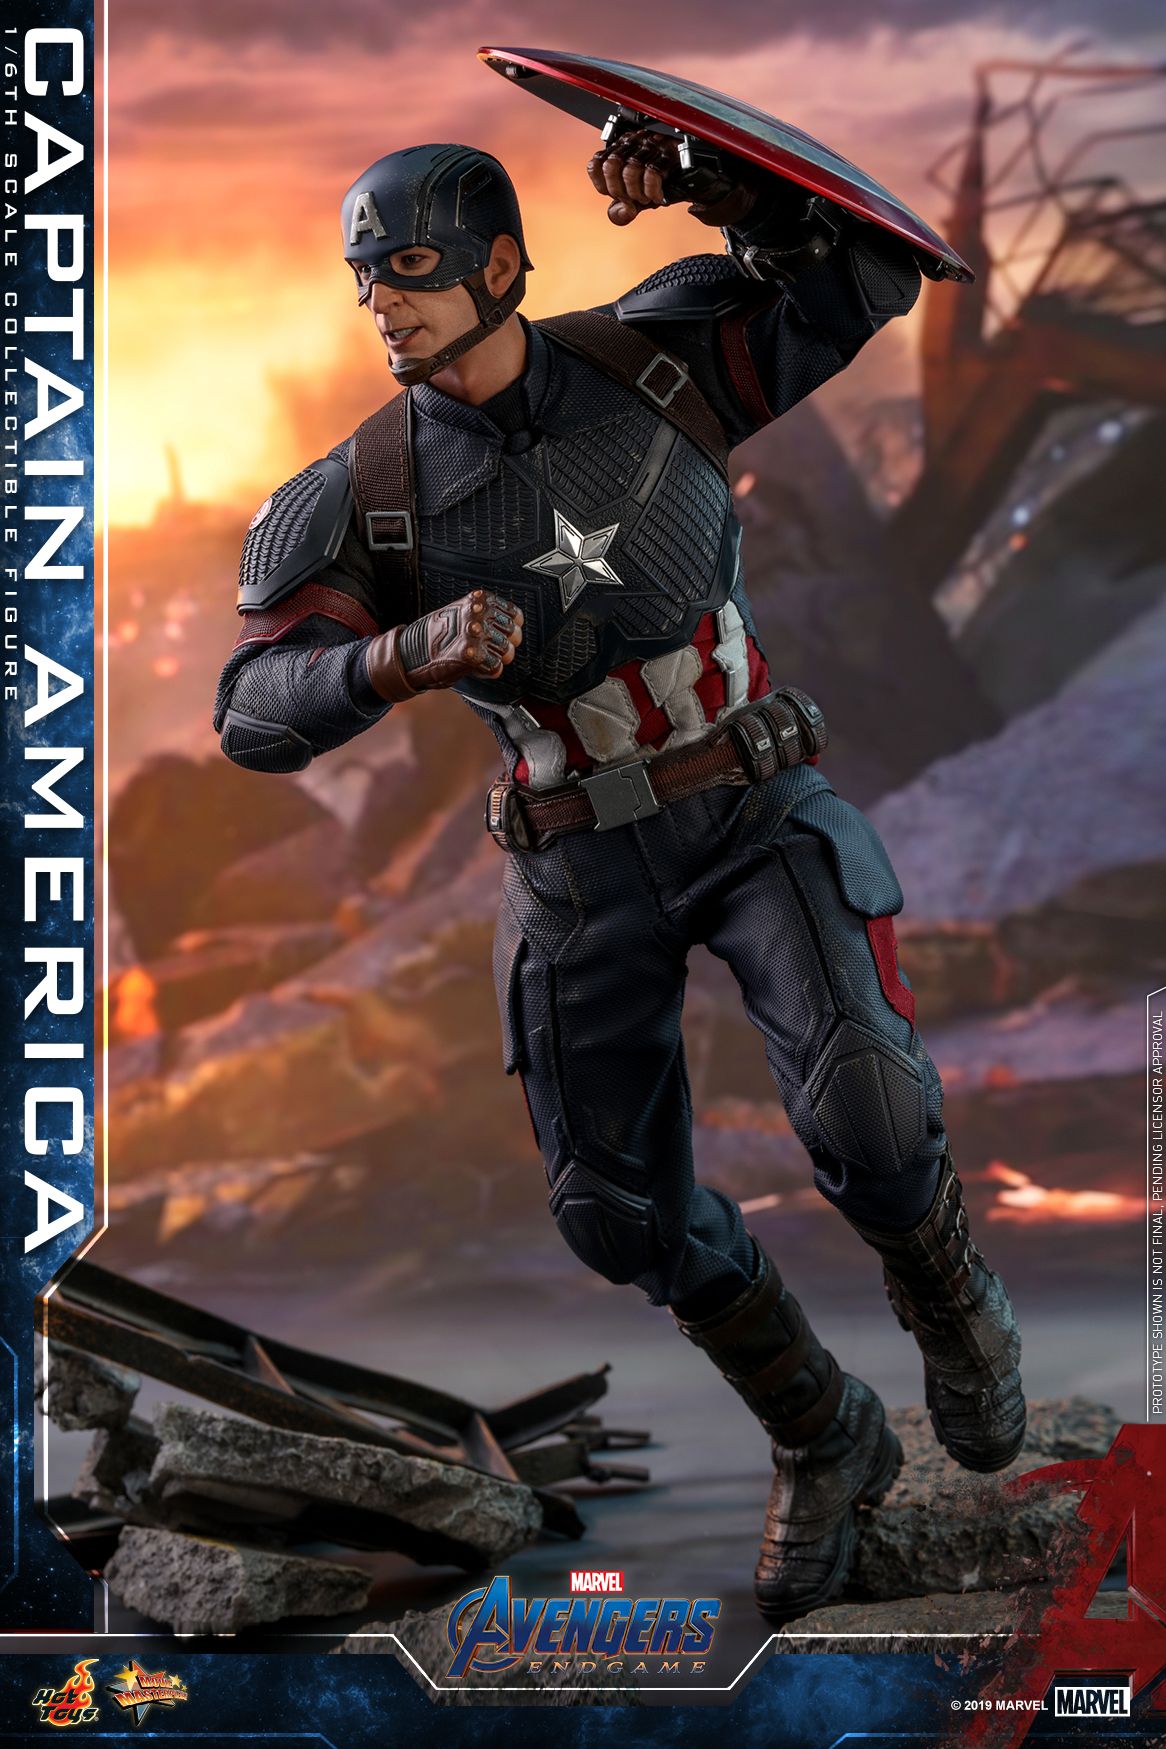 Hot Toys Avengers 4 Captain America Collectible Figure_pr4